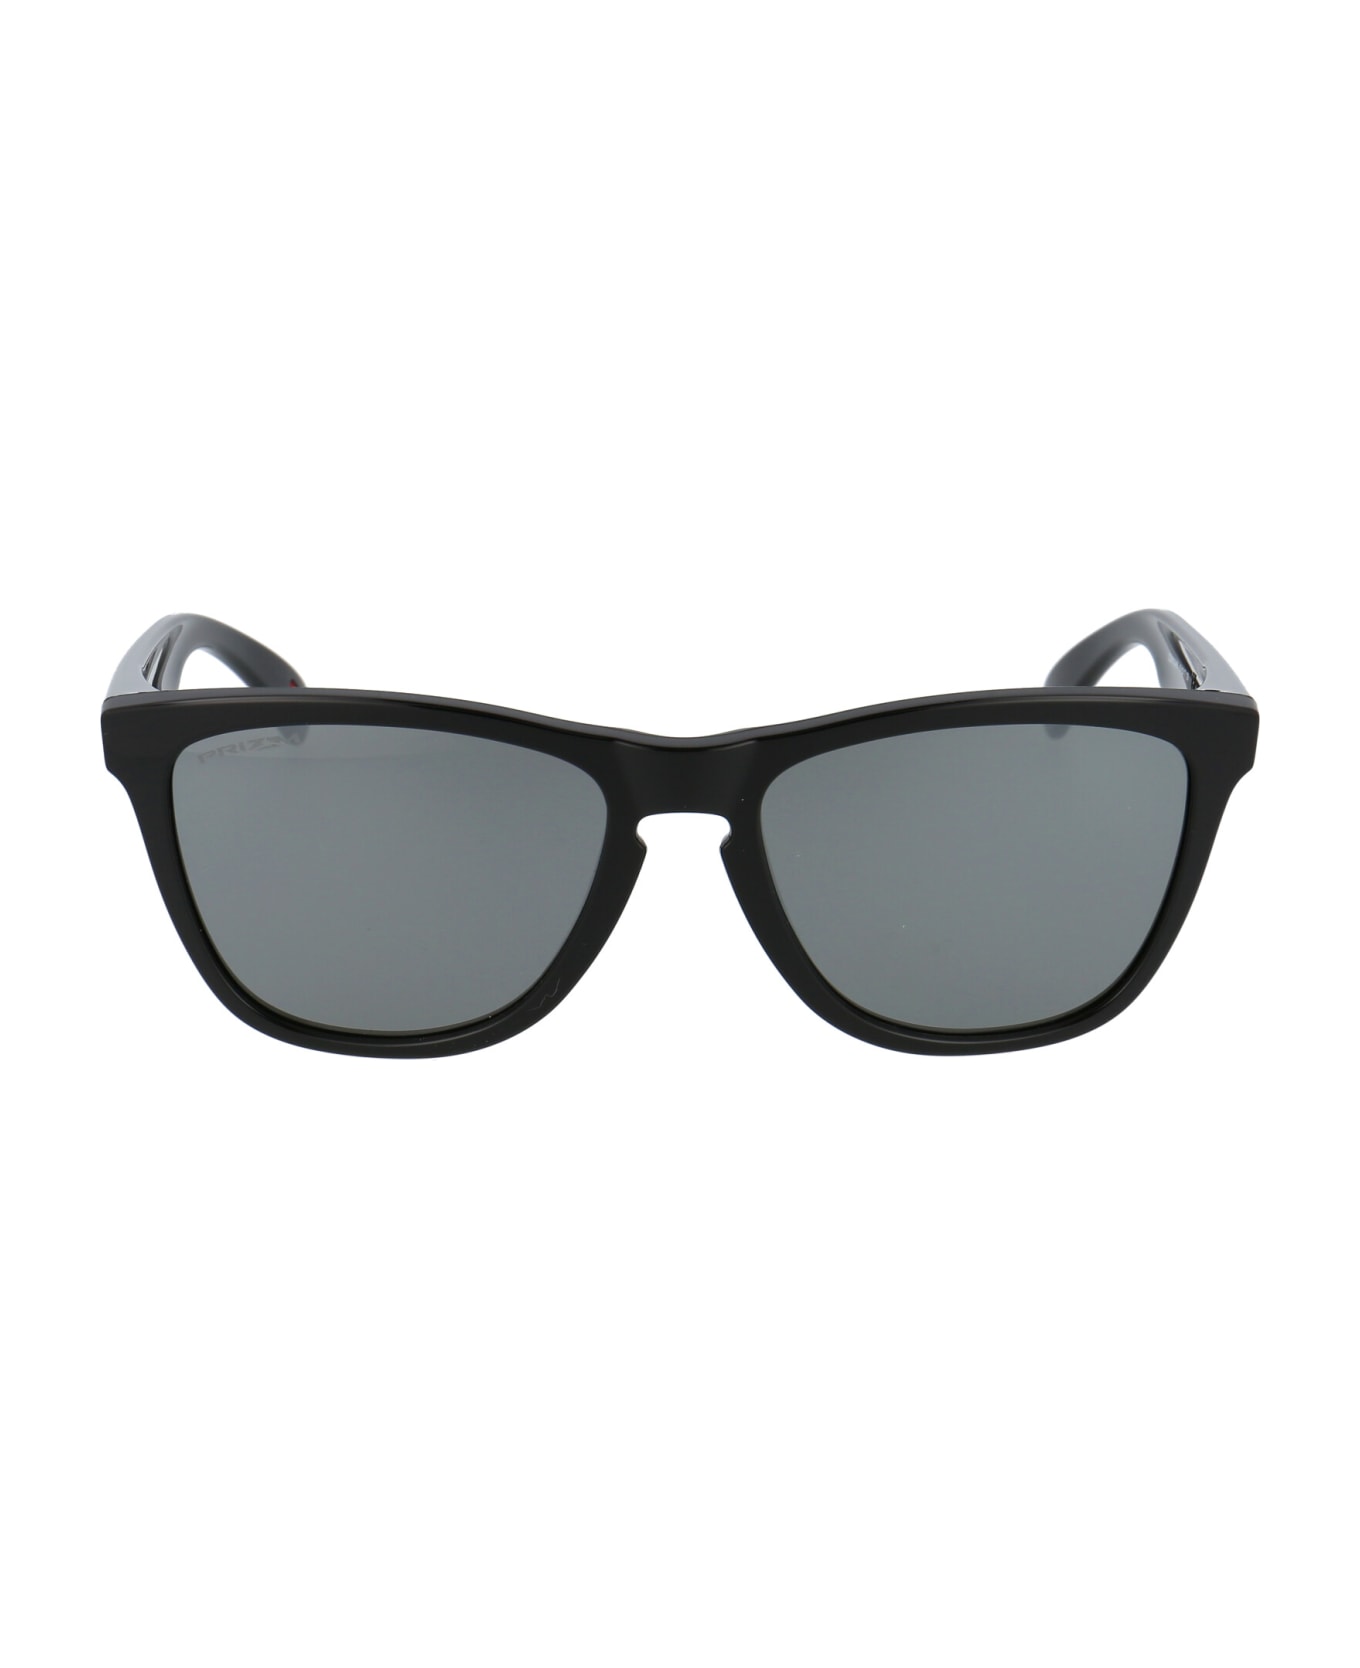 Oakley Frogskins Sunglasses - 9013C4 POLISHED BLACK サングラス